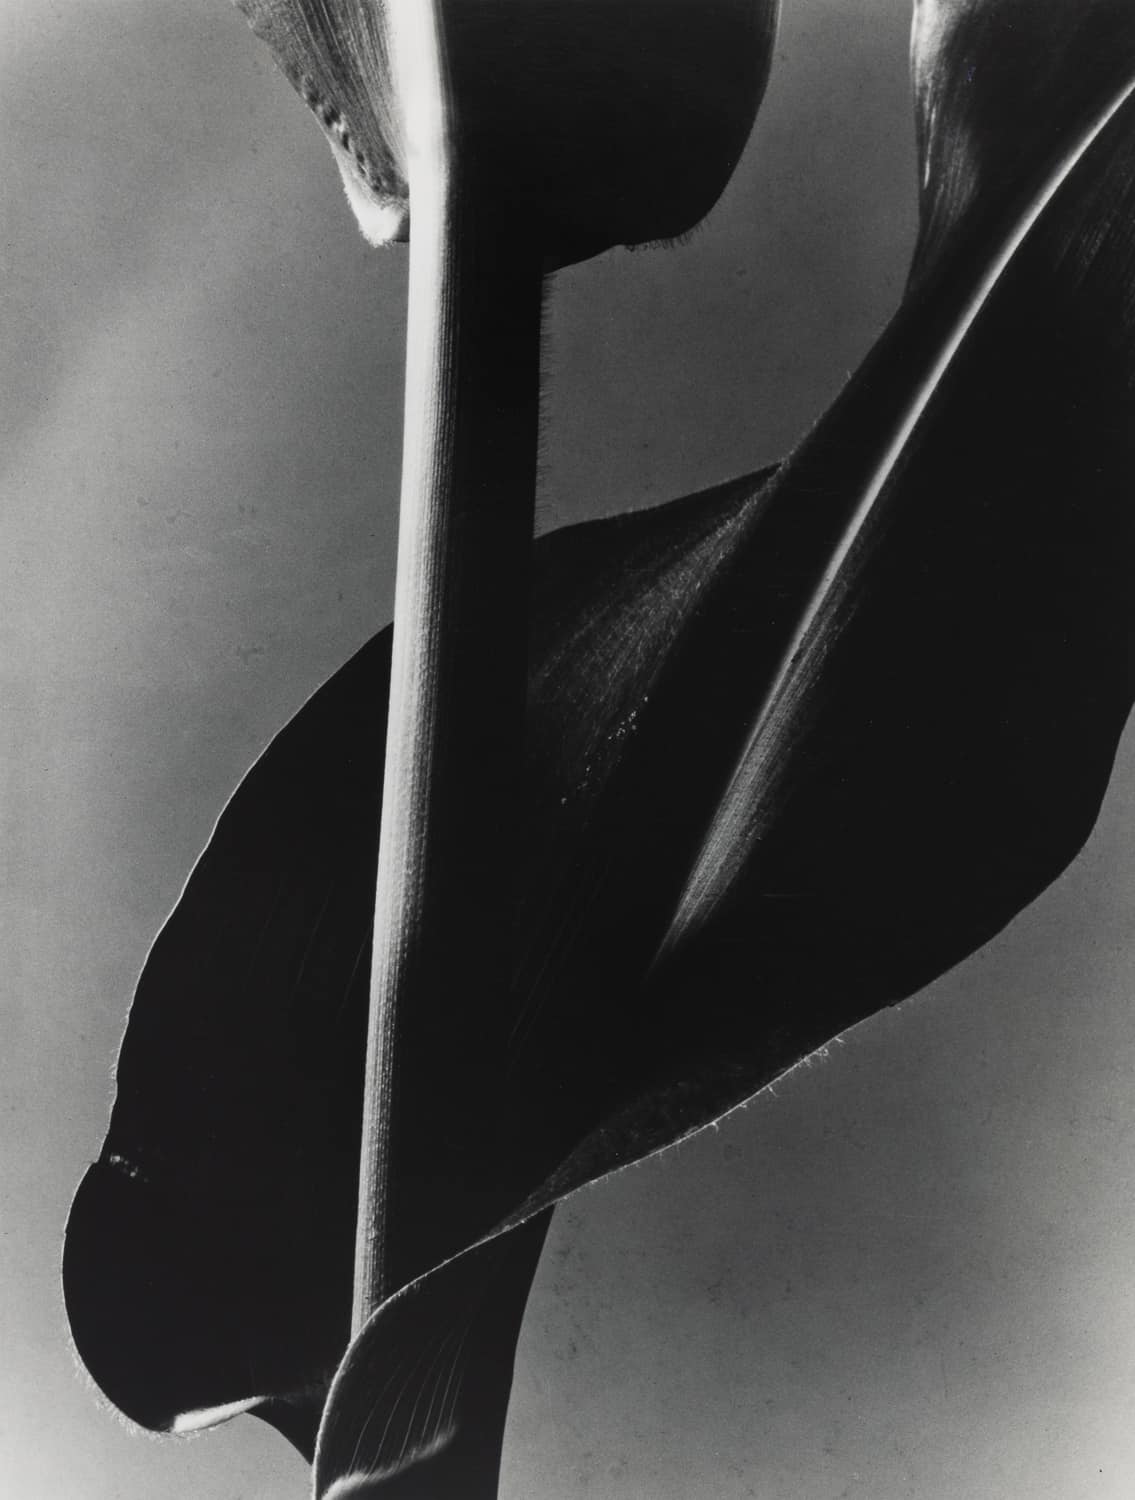 Barbara Morgan, Corn Stalk, 1945. Modern Objects, Huxley-Parlour Gallery, 3–5 Swallow St, London, W1B 4DE.